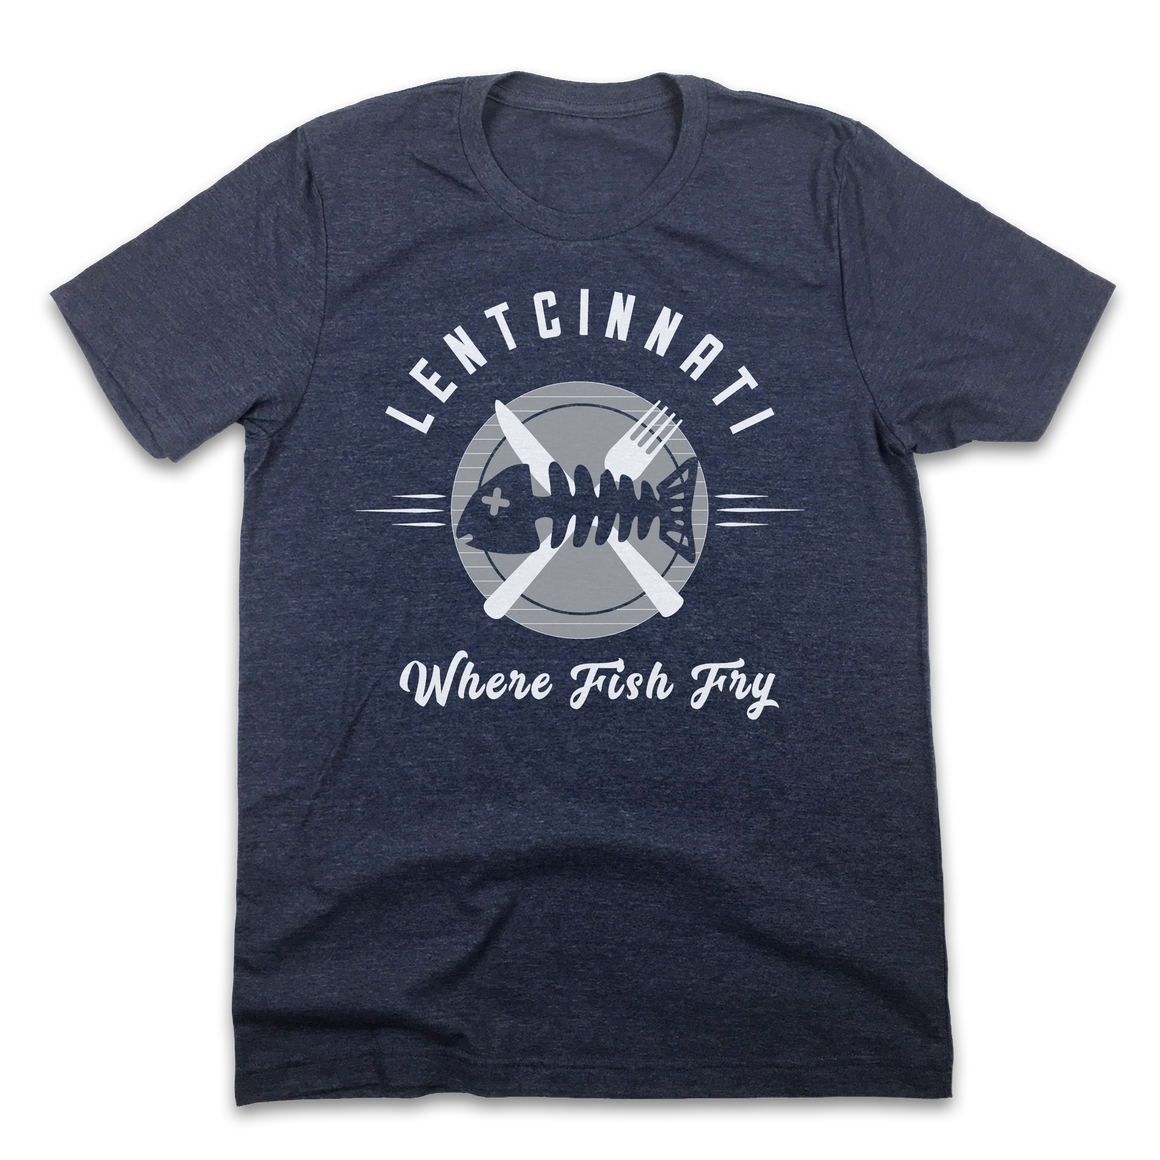 Lentcinnati - Where Fish Fry - Cincy Shirts